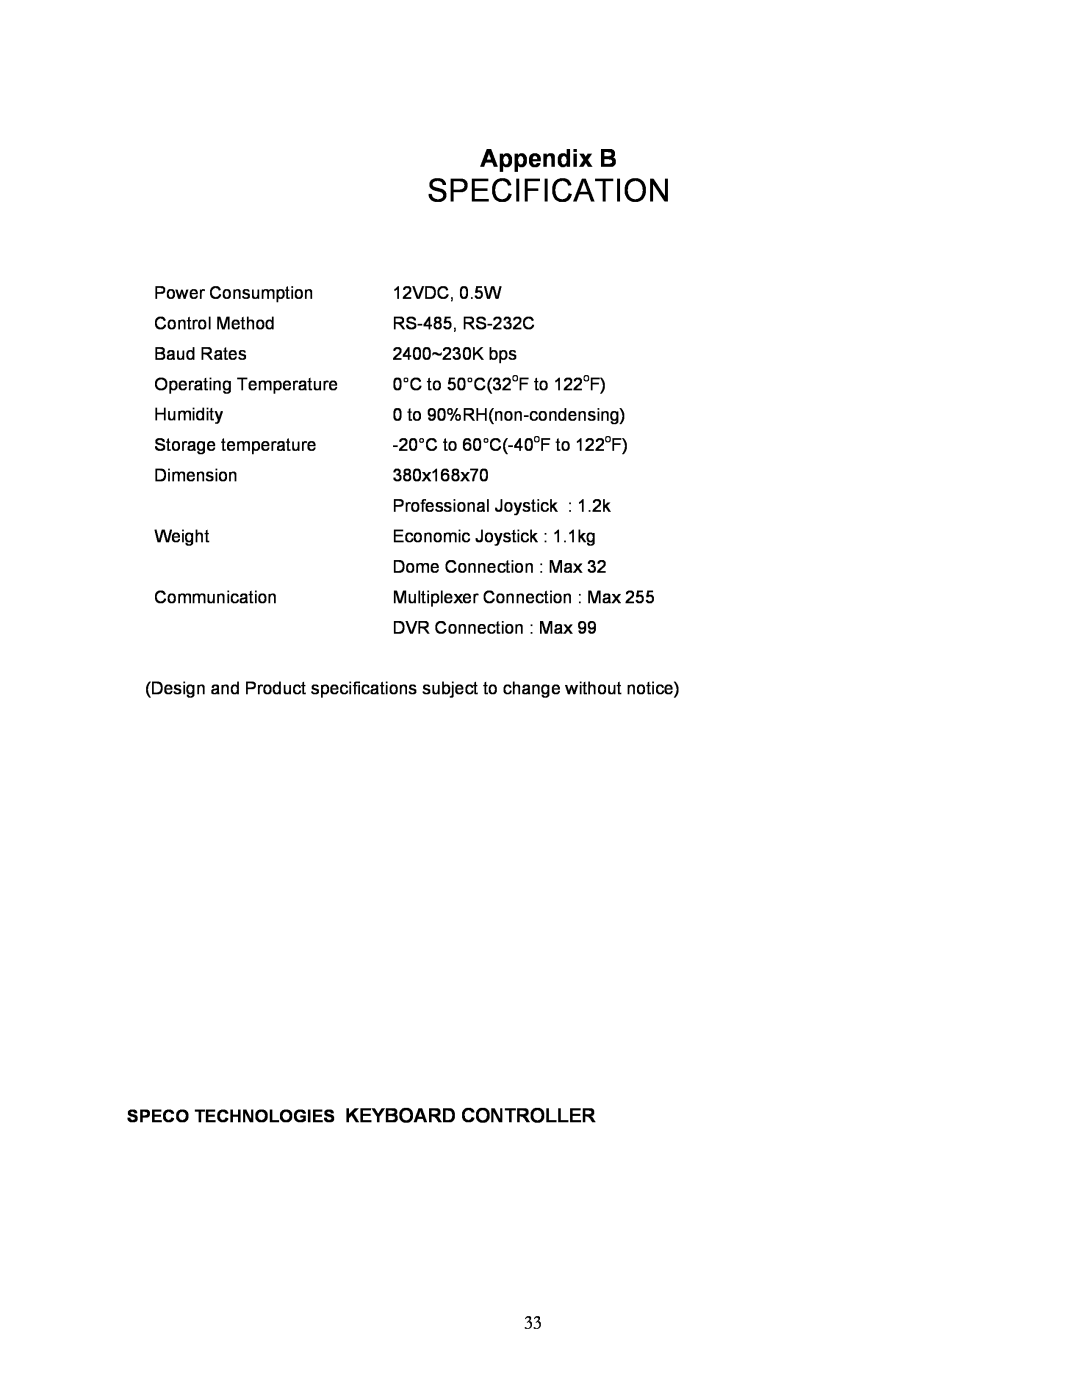 Speco Technologies KBD-927 instruction manual Specification, Appendix B 